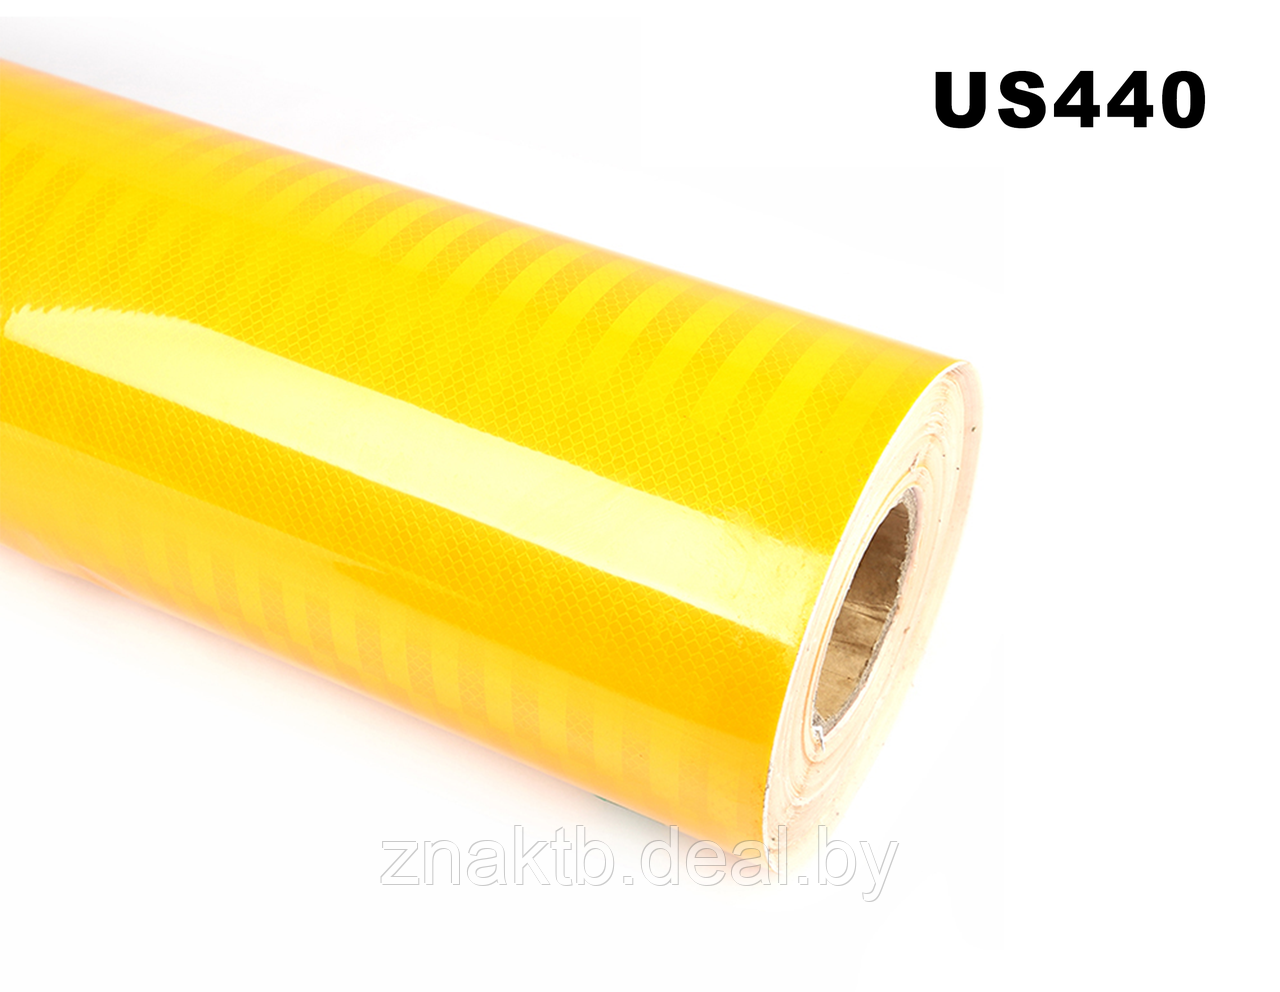 Пленка светоотражающая US440 желтая 1,24 м*45,7 м